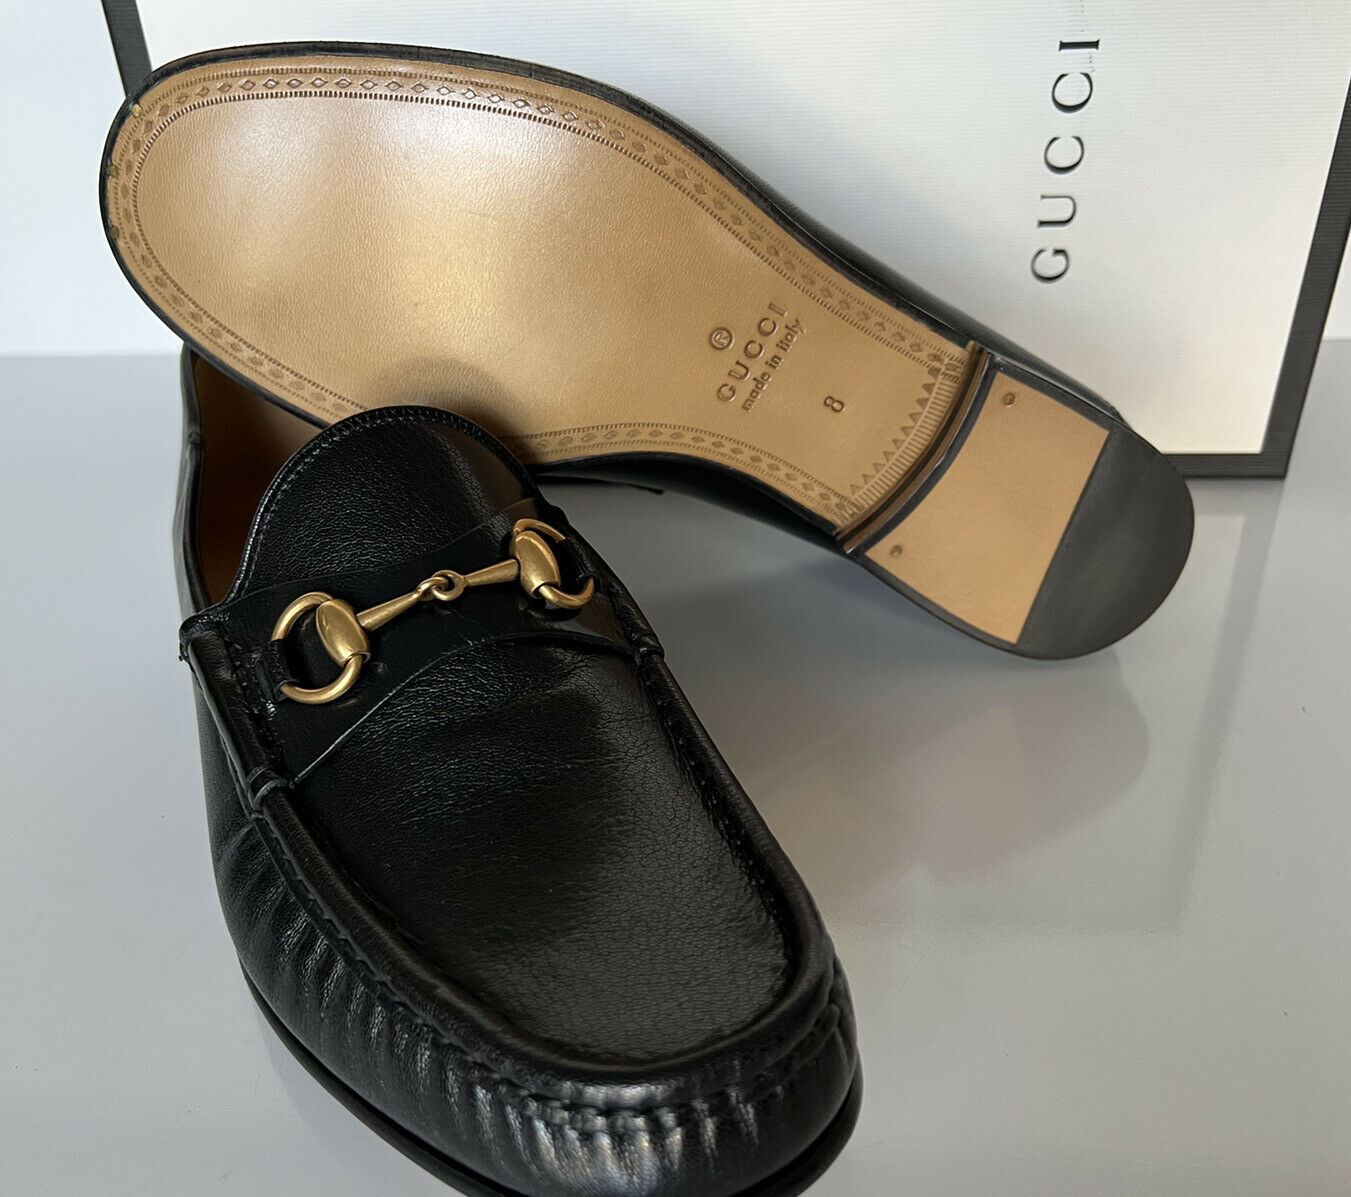 NIB Gucci Men's Horsebit Leather Moccasin Shoes Black 8.5 US (Gucci 8) 523202